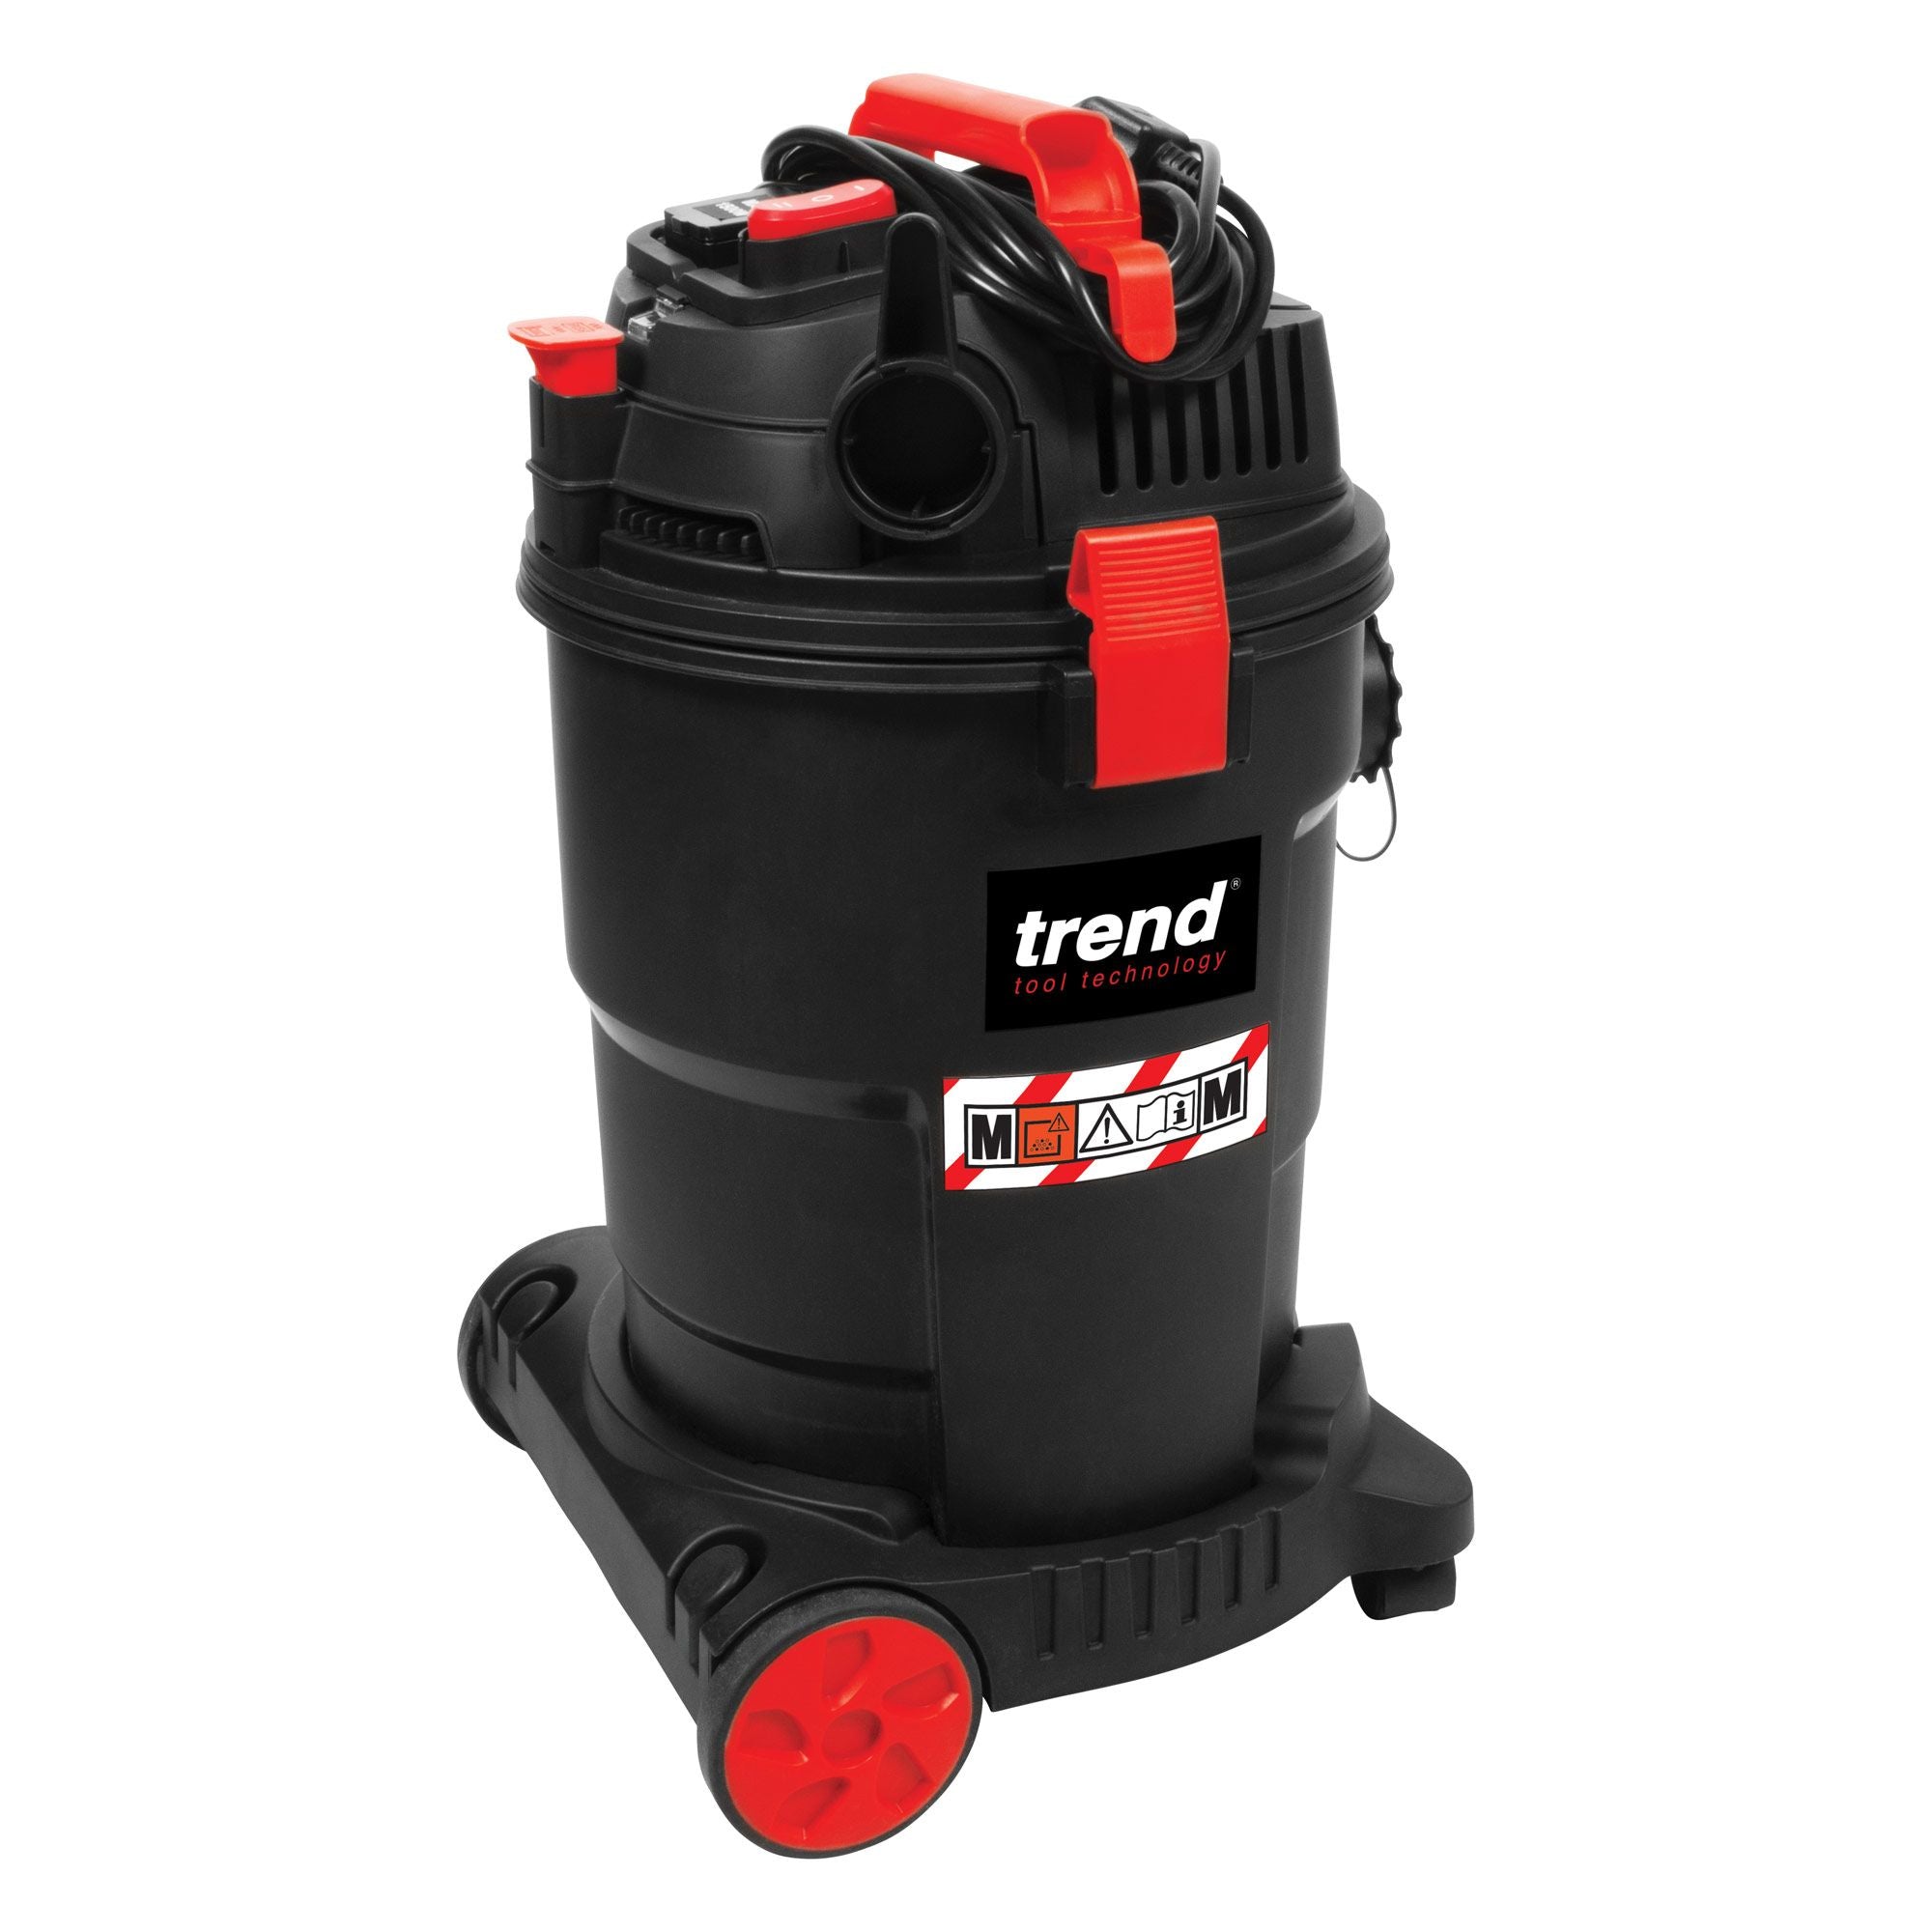 Trend T33A M Class Wet & Dry Vacuum 240V/1200W